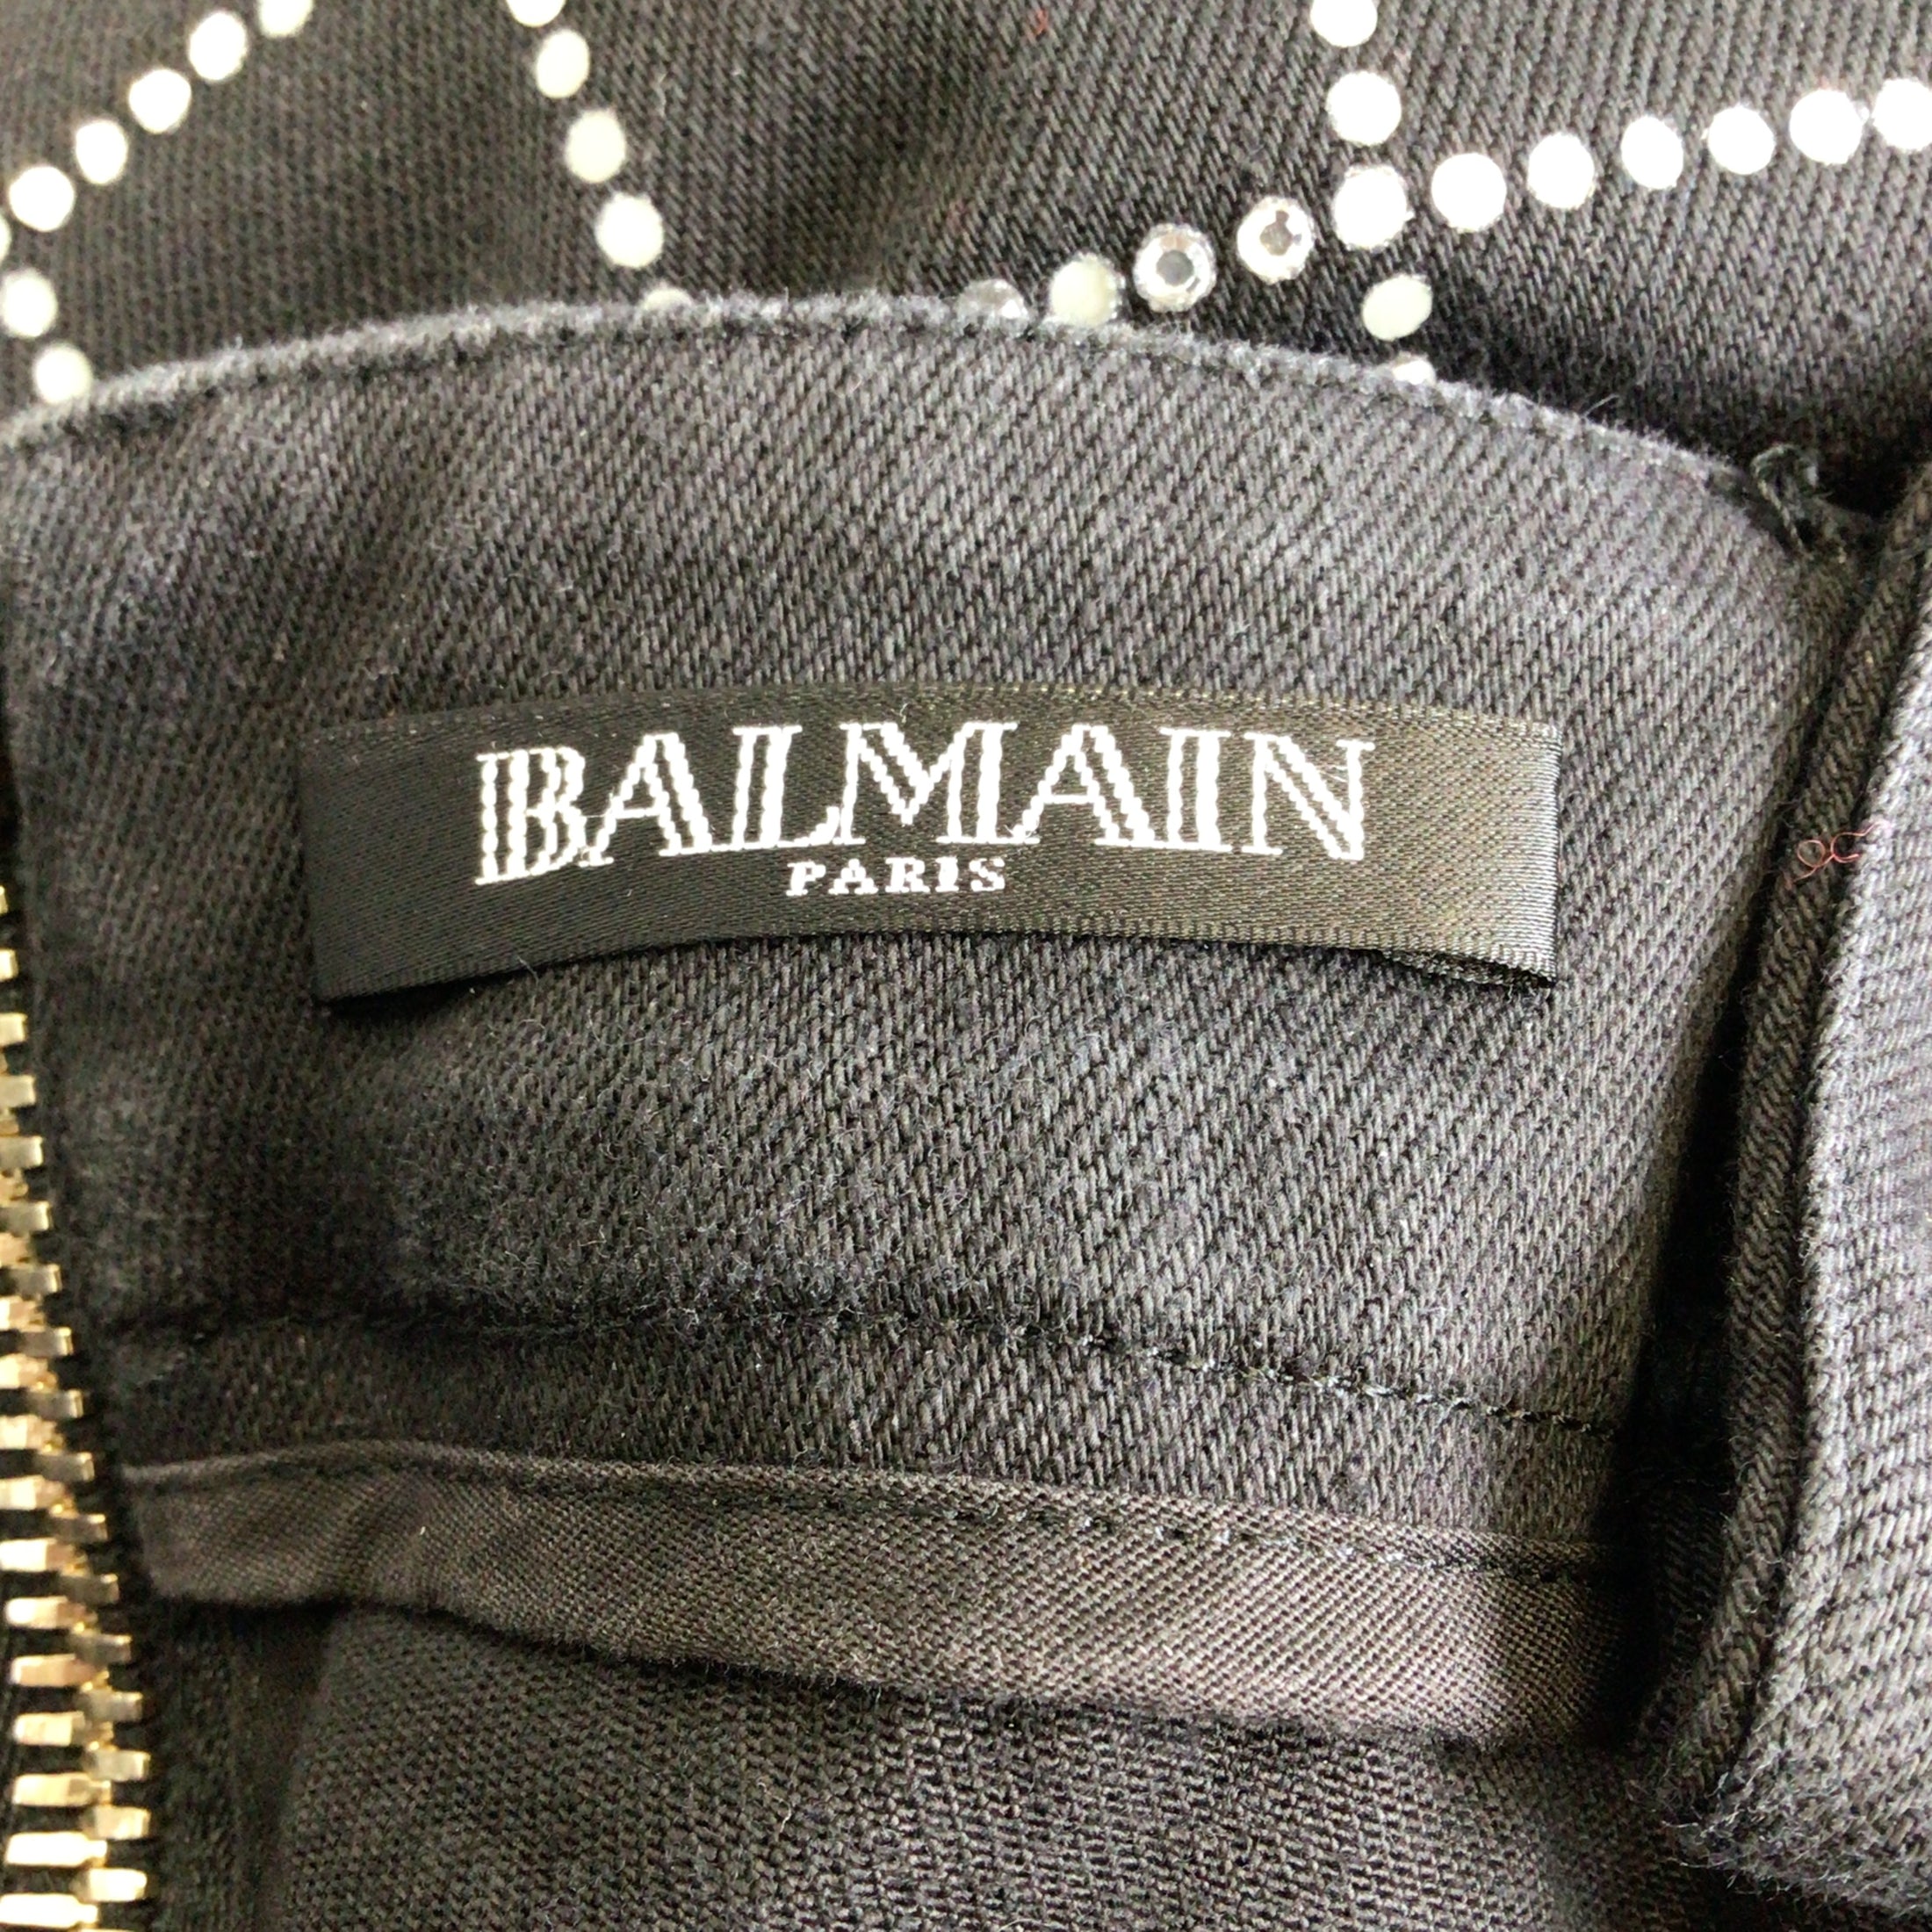 Balmain Black Rhinestone Embellished Grid Pattern Sleeveless Denim Mini Dress